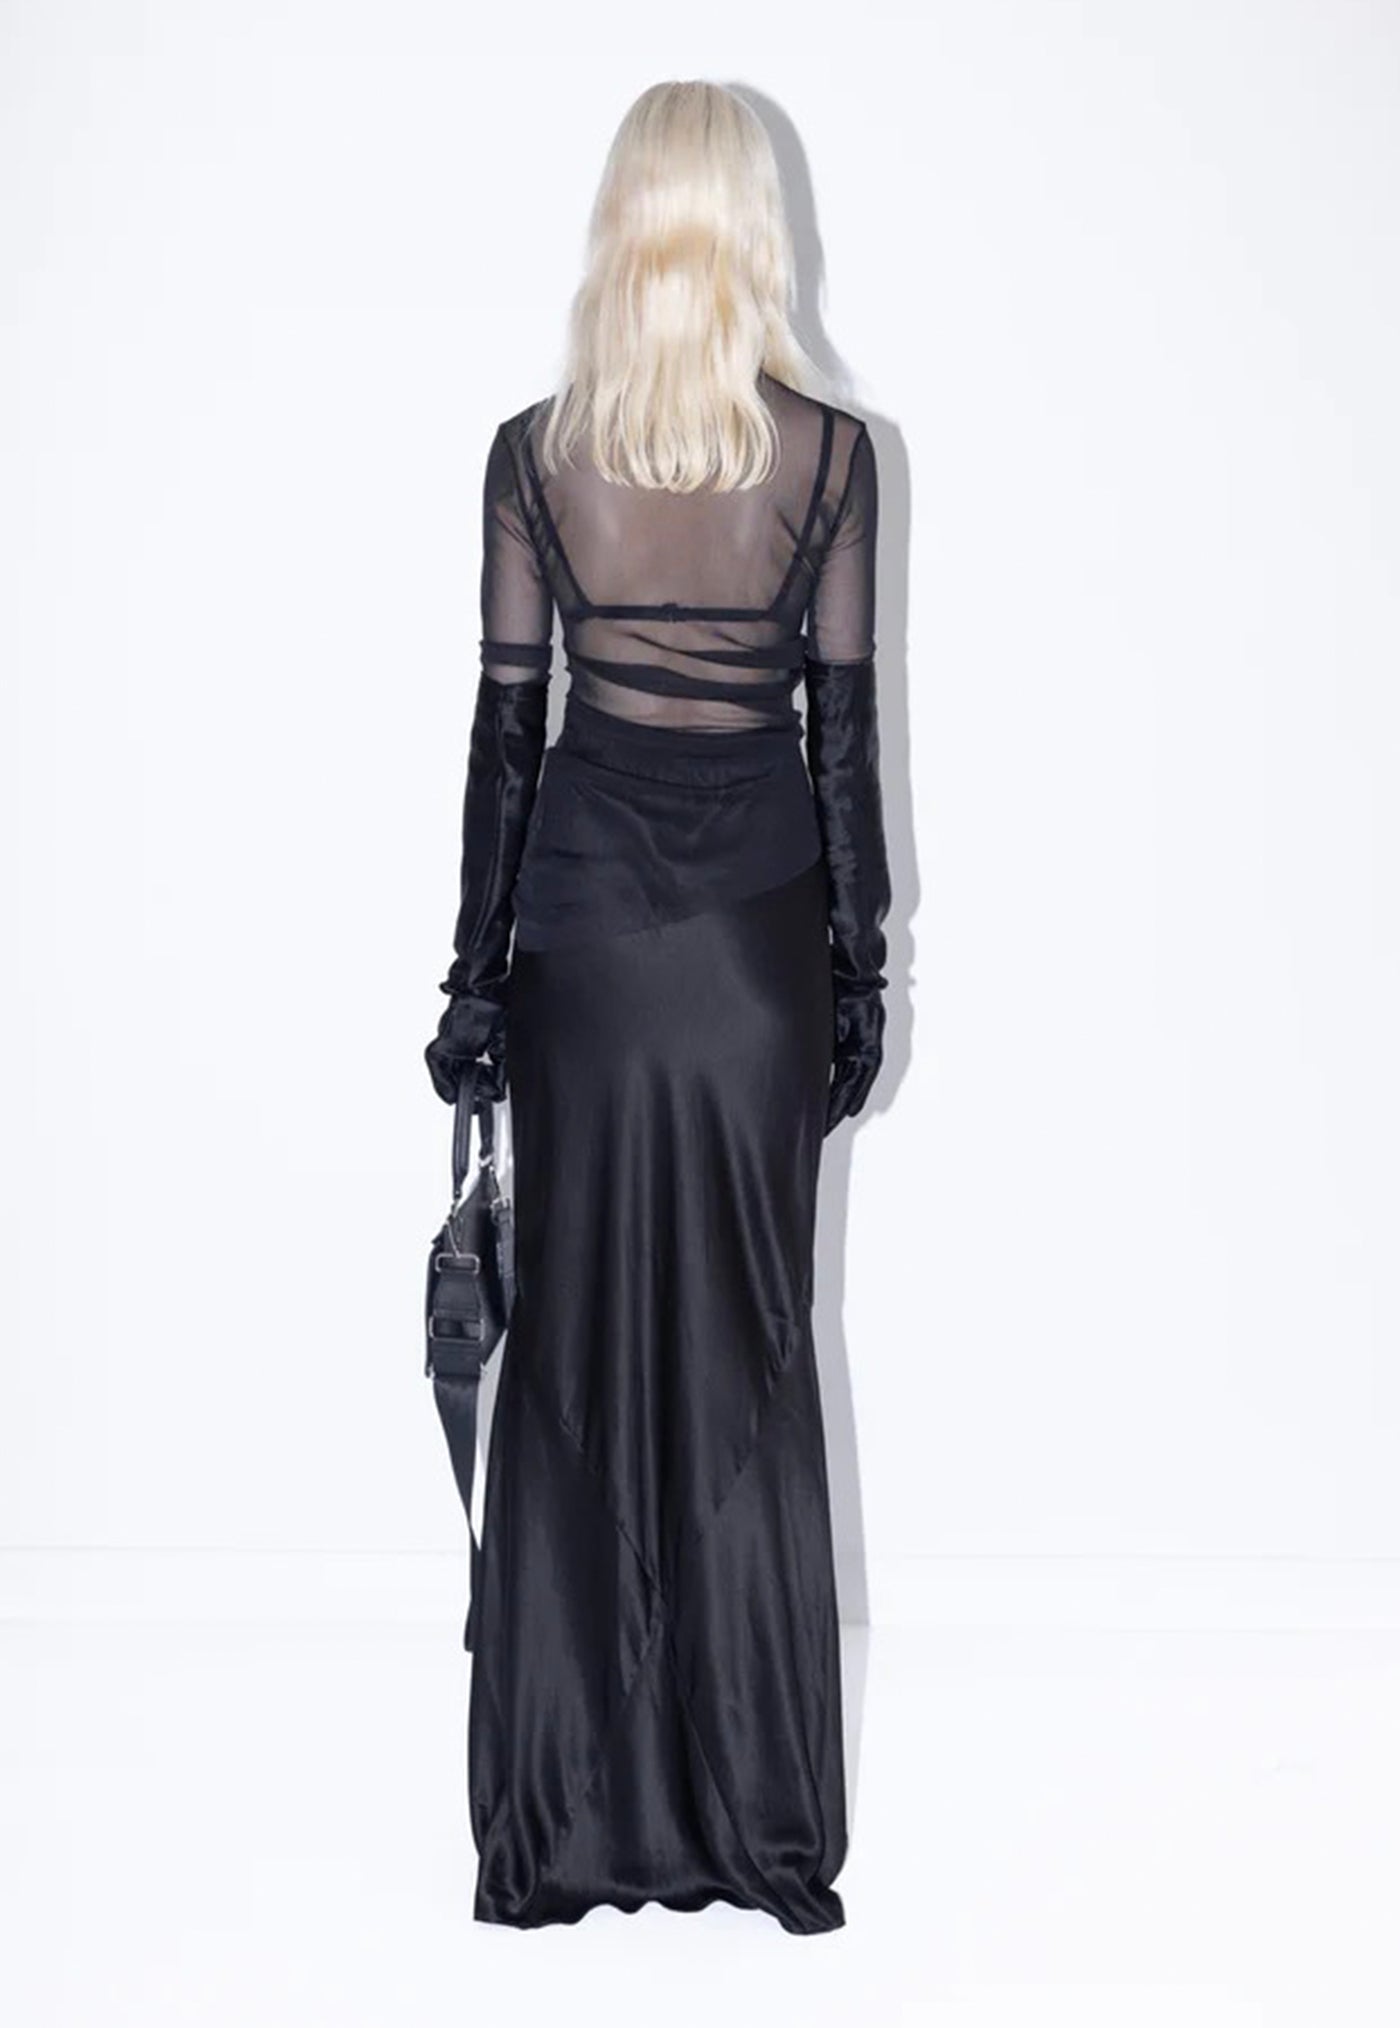 Christiansands Skirt - Black sold by Angel Divine